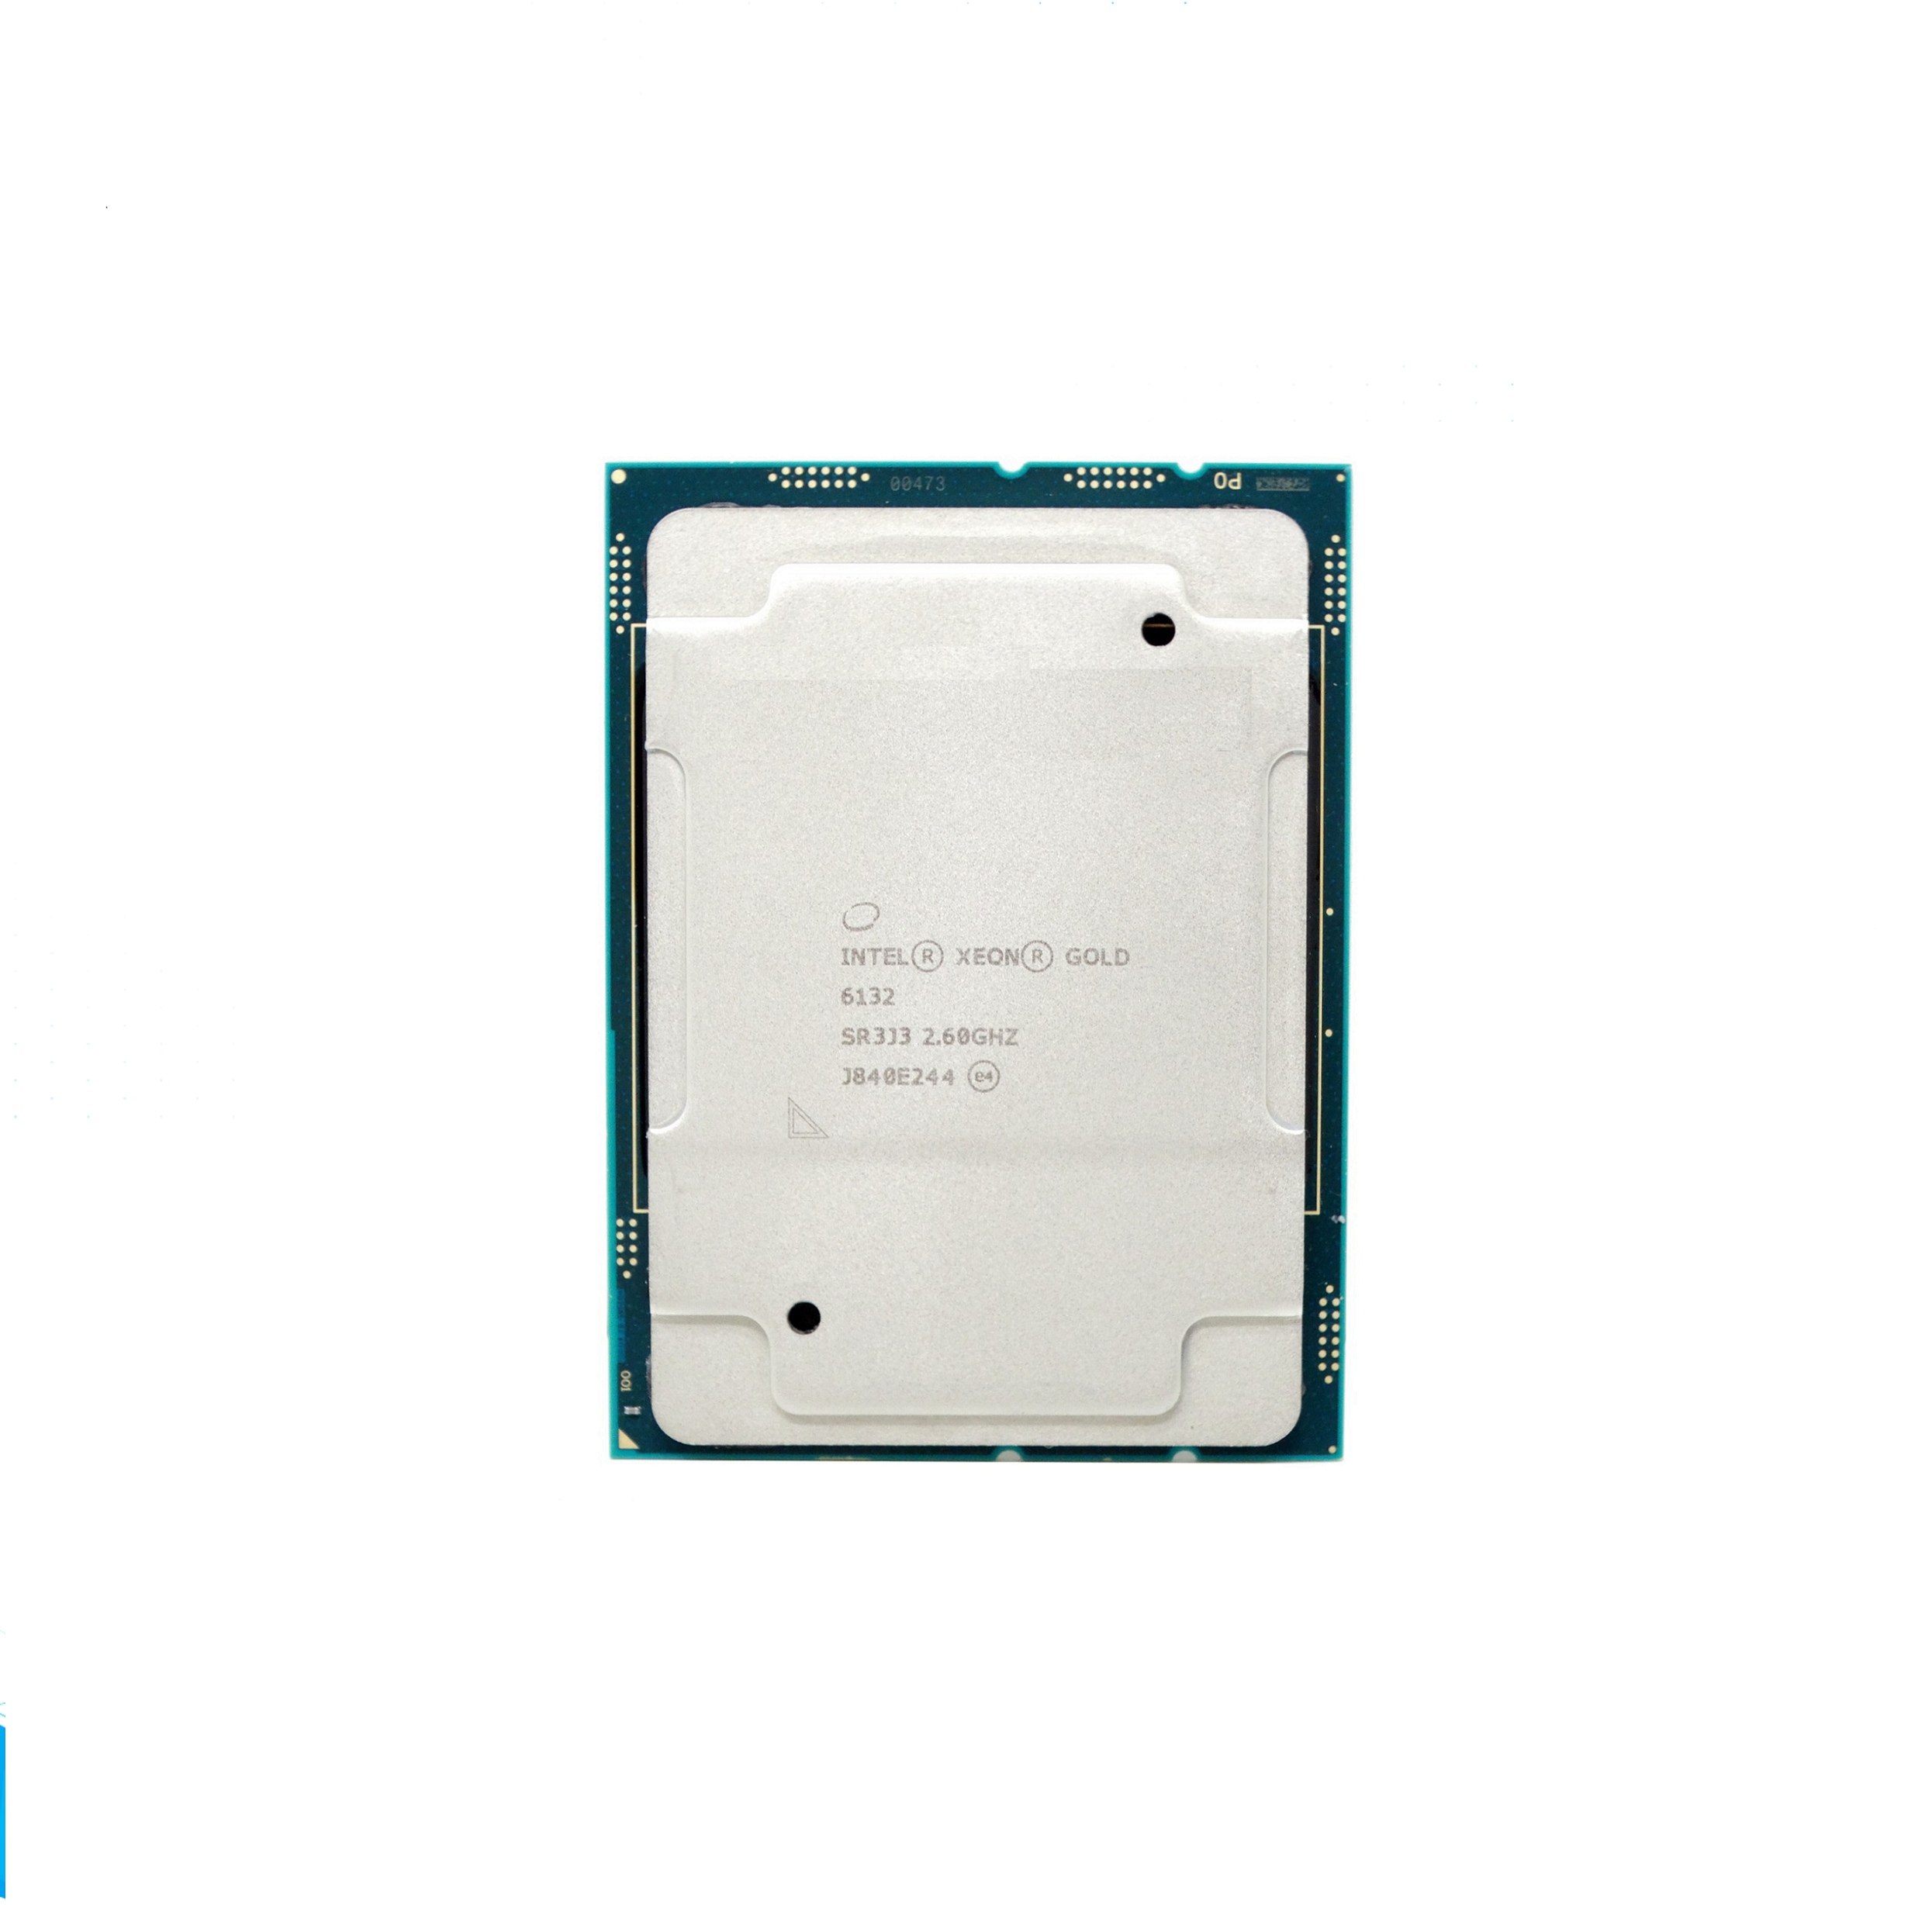 Cisco Intel Xeon Gold 6132 14-Core 2.6GHz 140W LGA3647 Processor (UCS-CPU-6132)